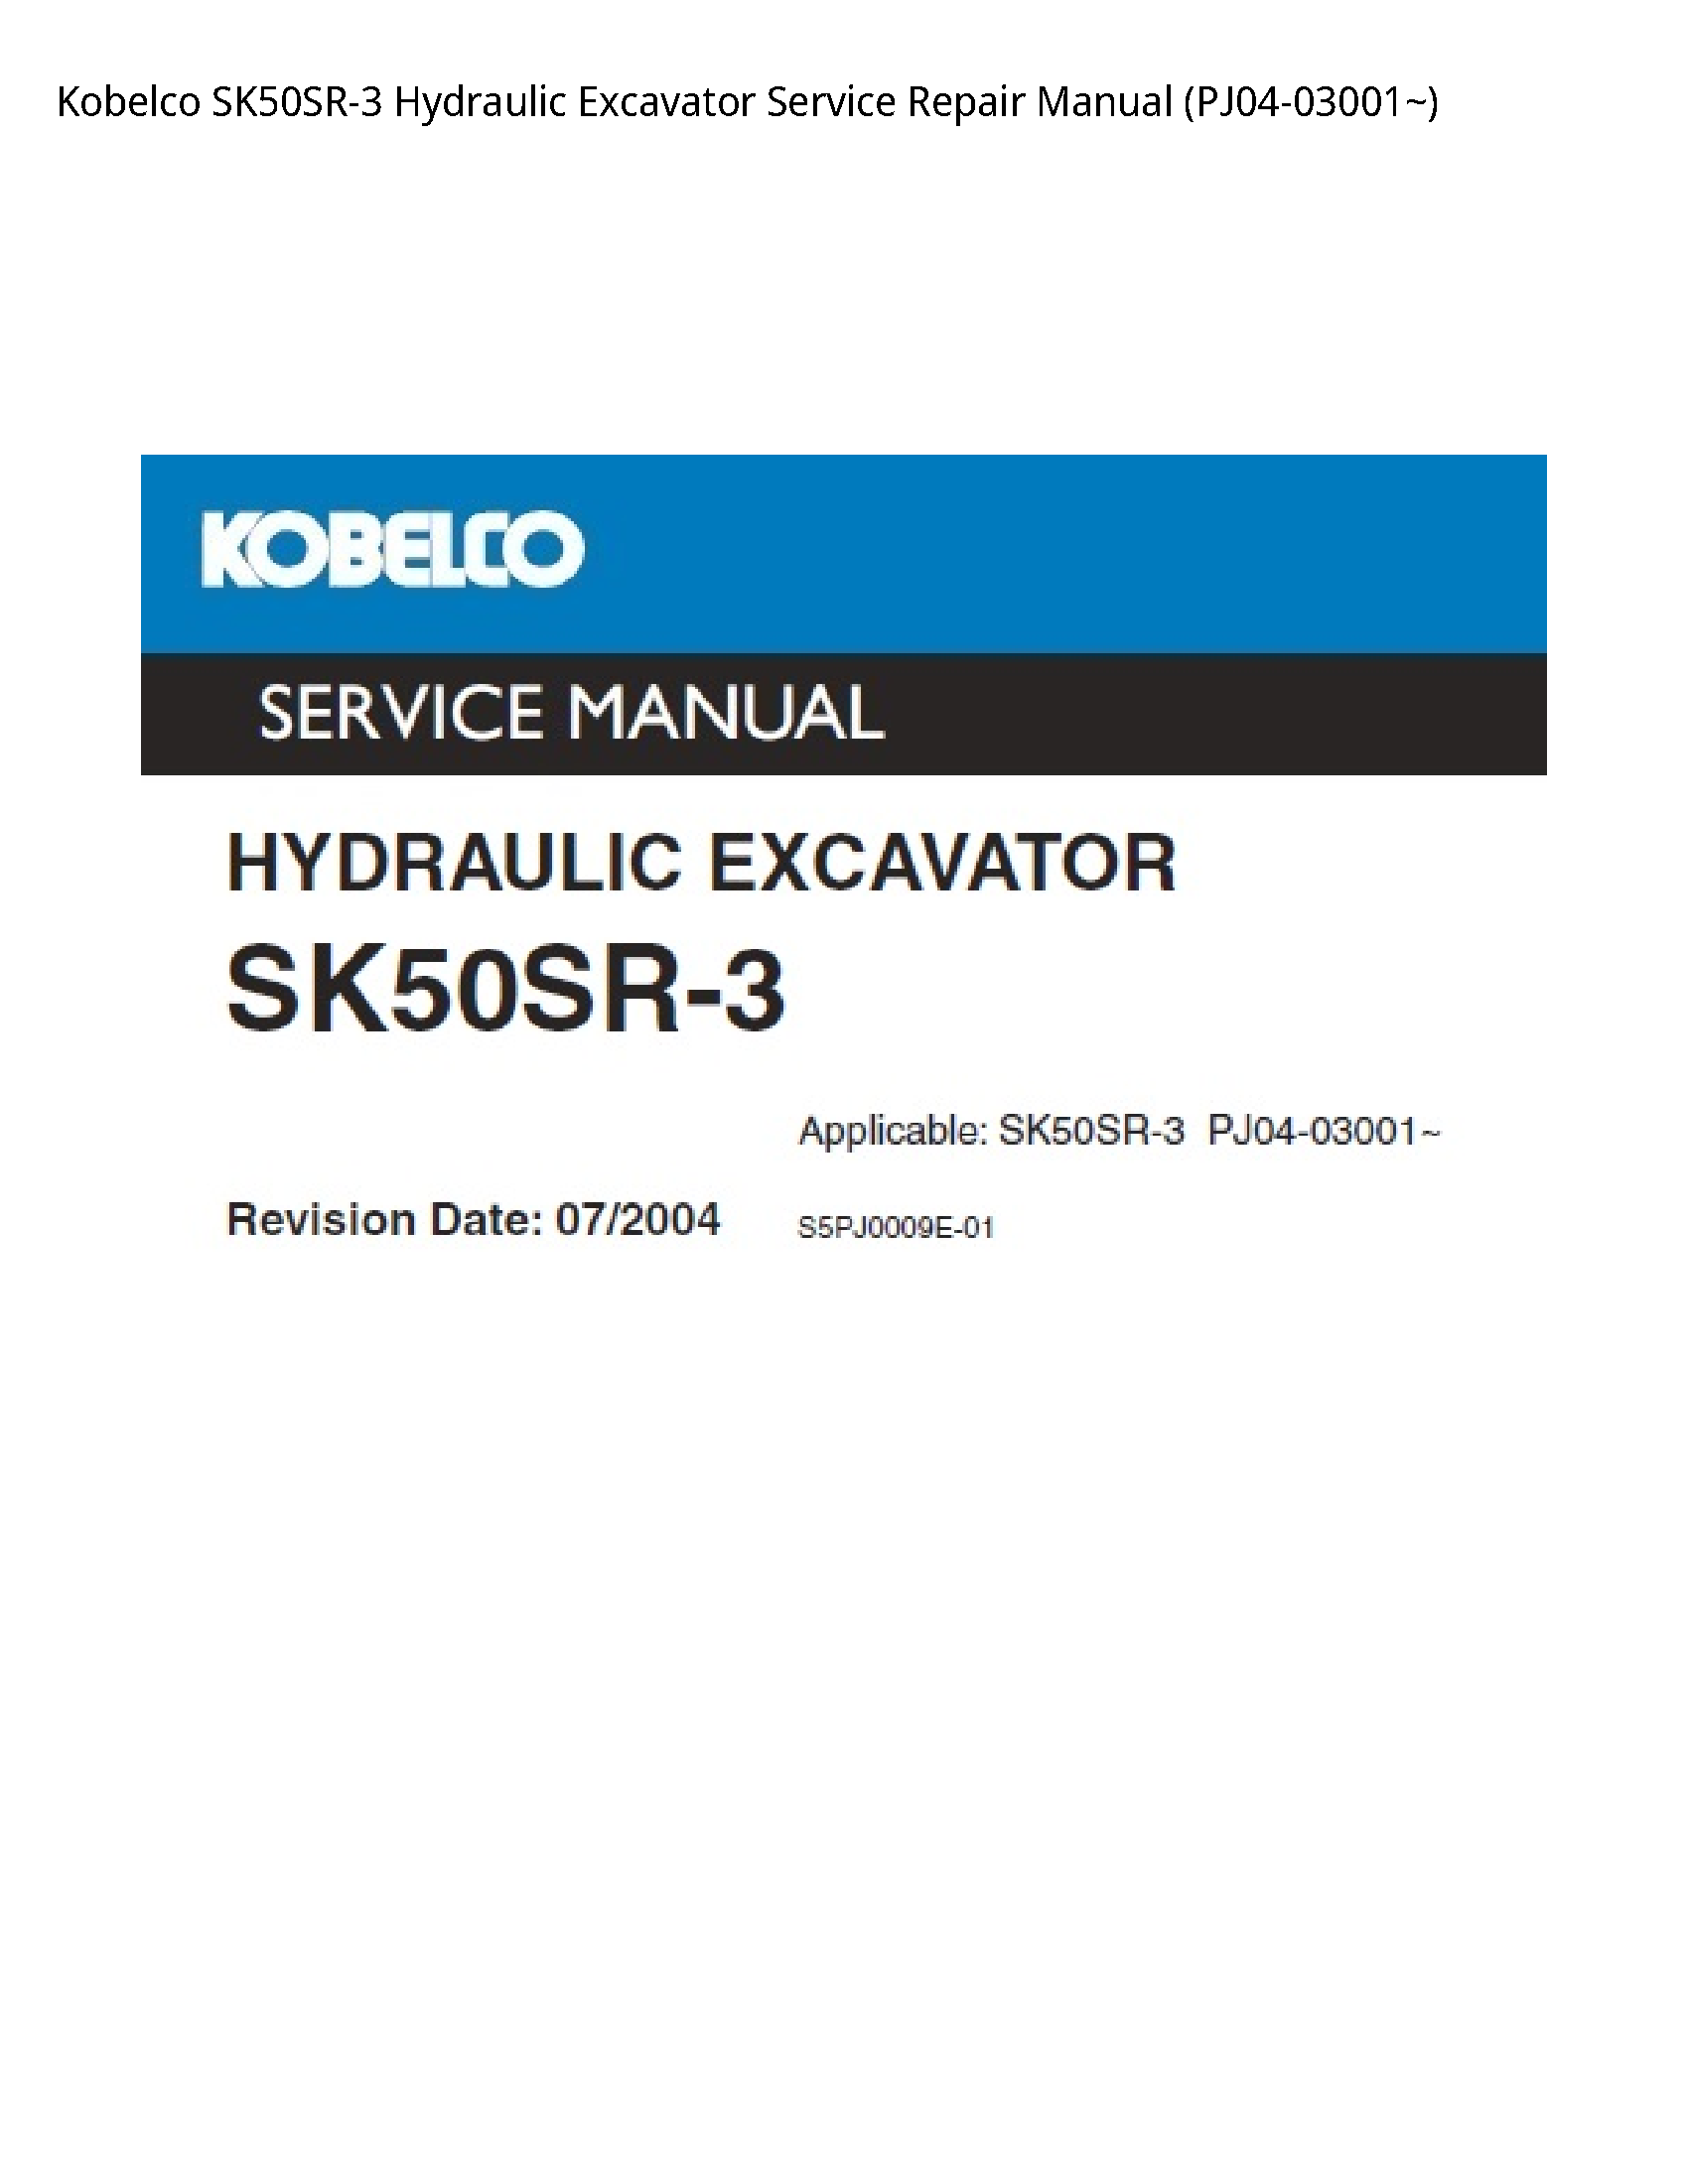 Kobelco SK50SR-3 Hydraulic Excavator manual